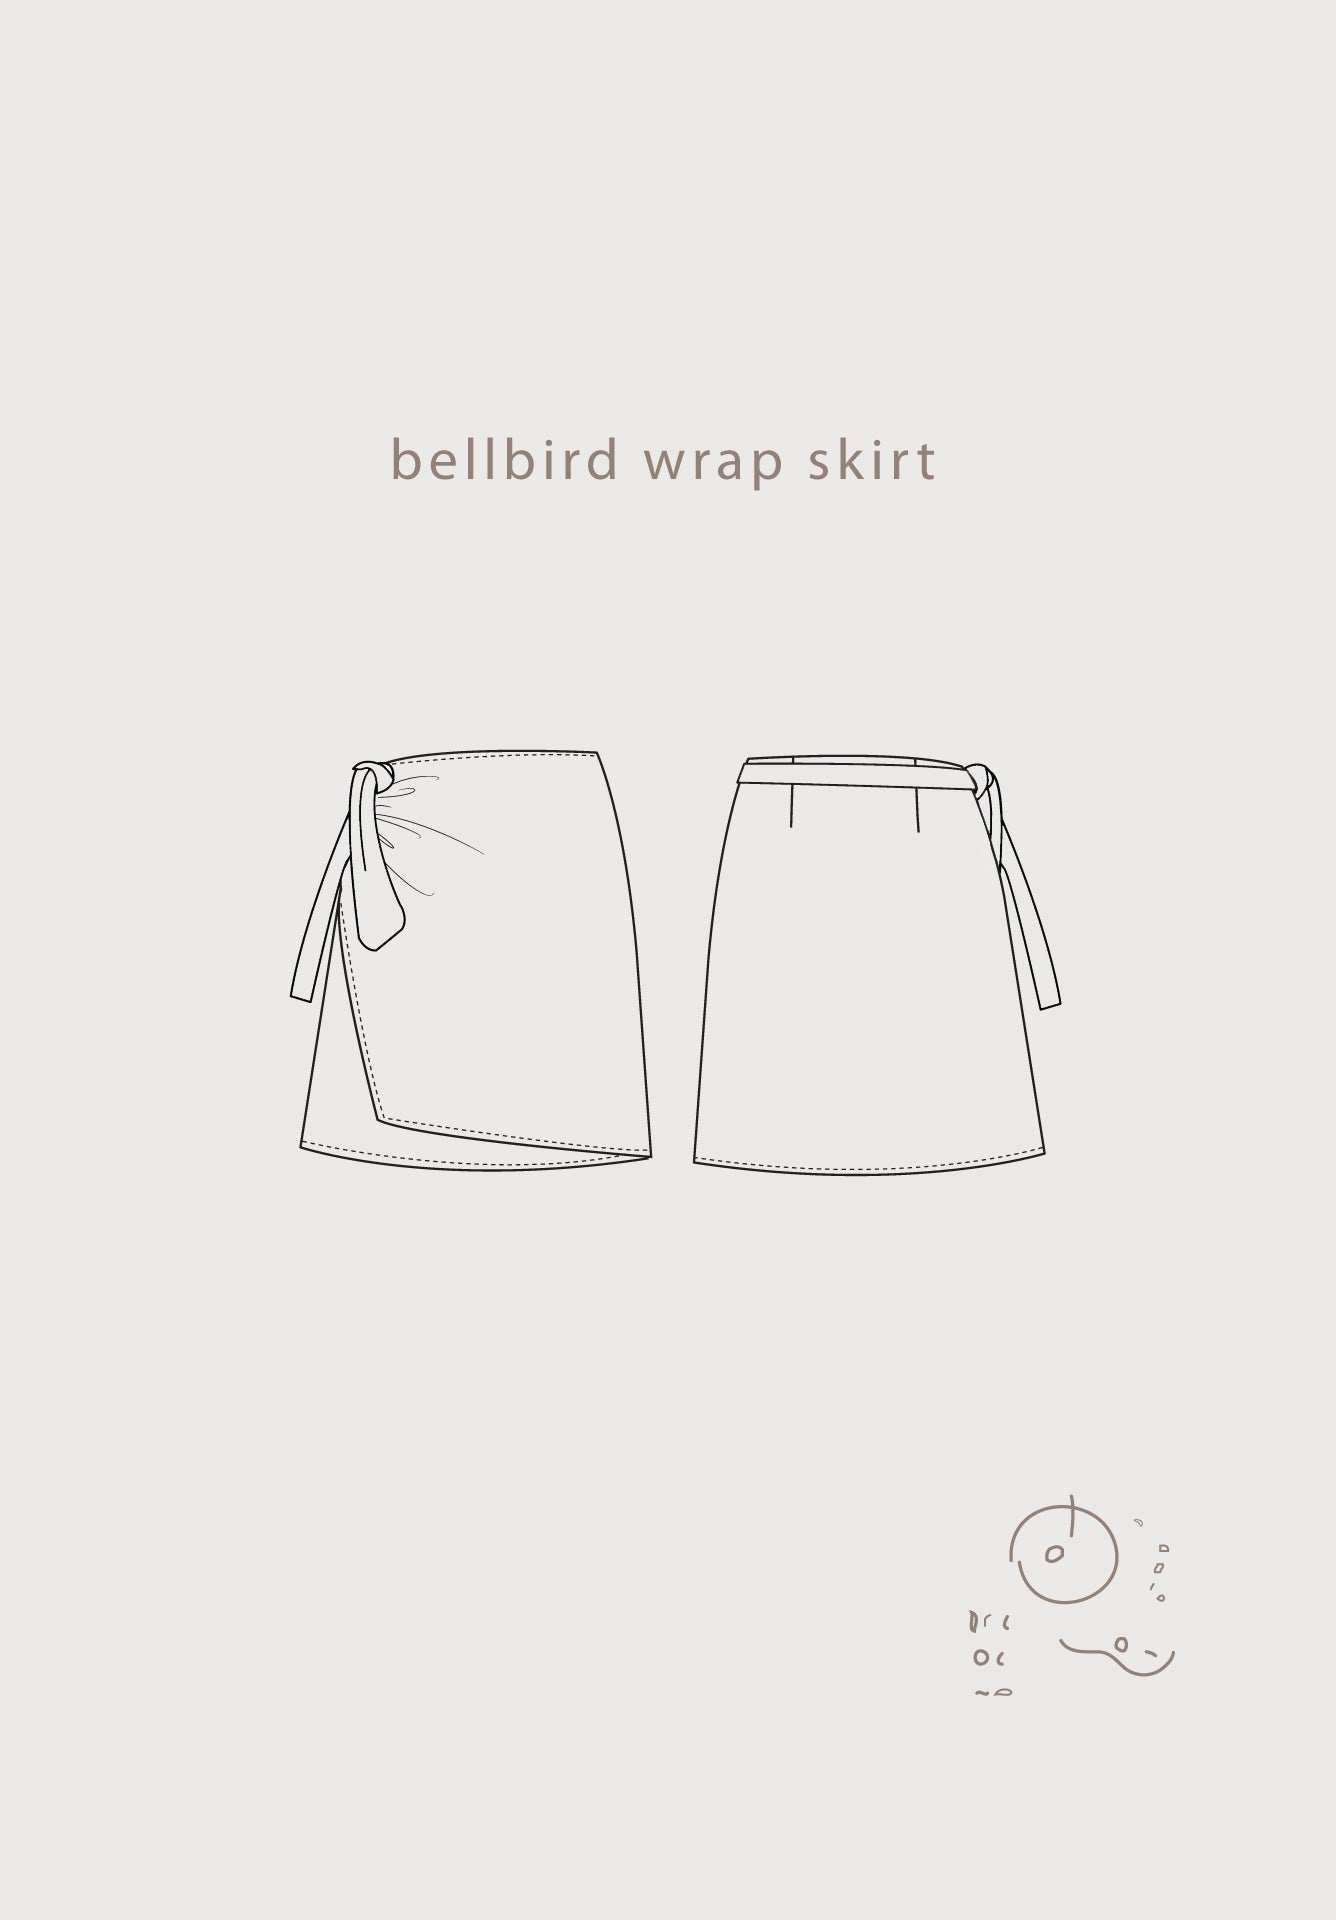 Common Stitch Bellbird Wrap Skirt (Paper Pattern)